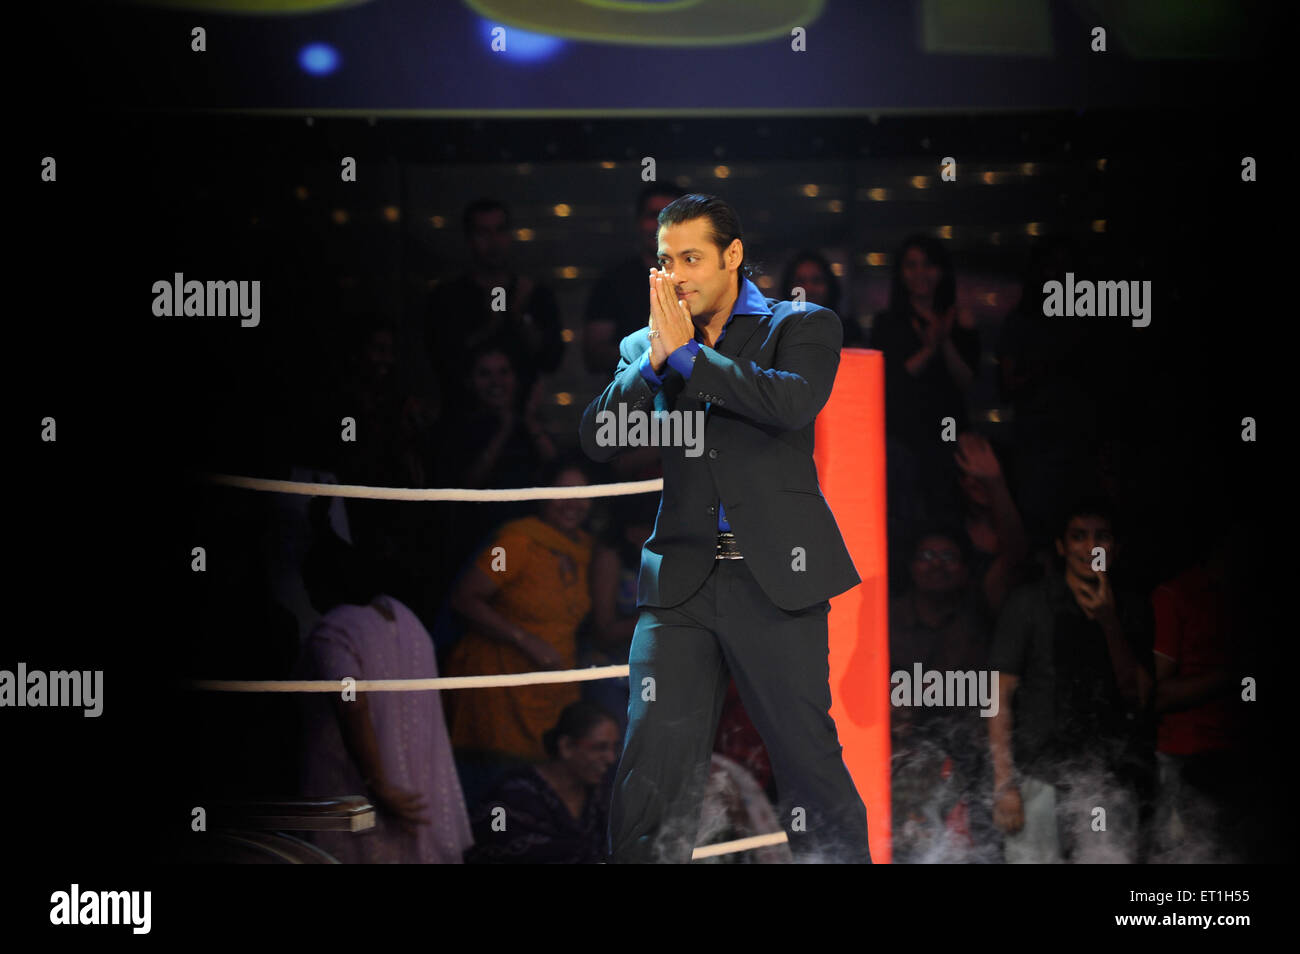 Salman Khan, Dus Ka Dum show, Abdul Rashid Salim Salman Khan, attore indiano, produttore cinematografico, personalità televisiva, India, Asia Foto Stock